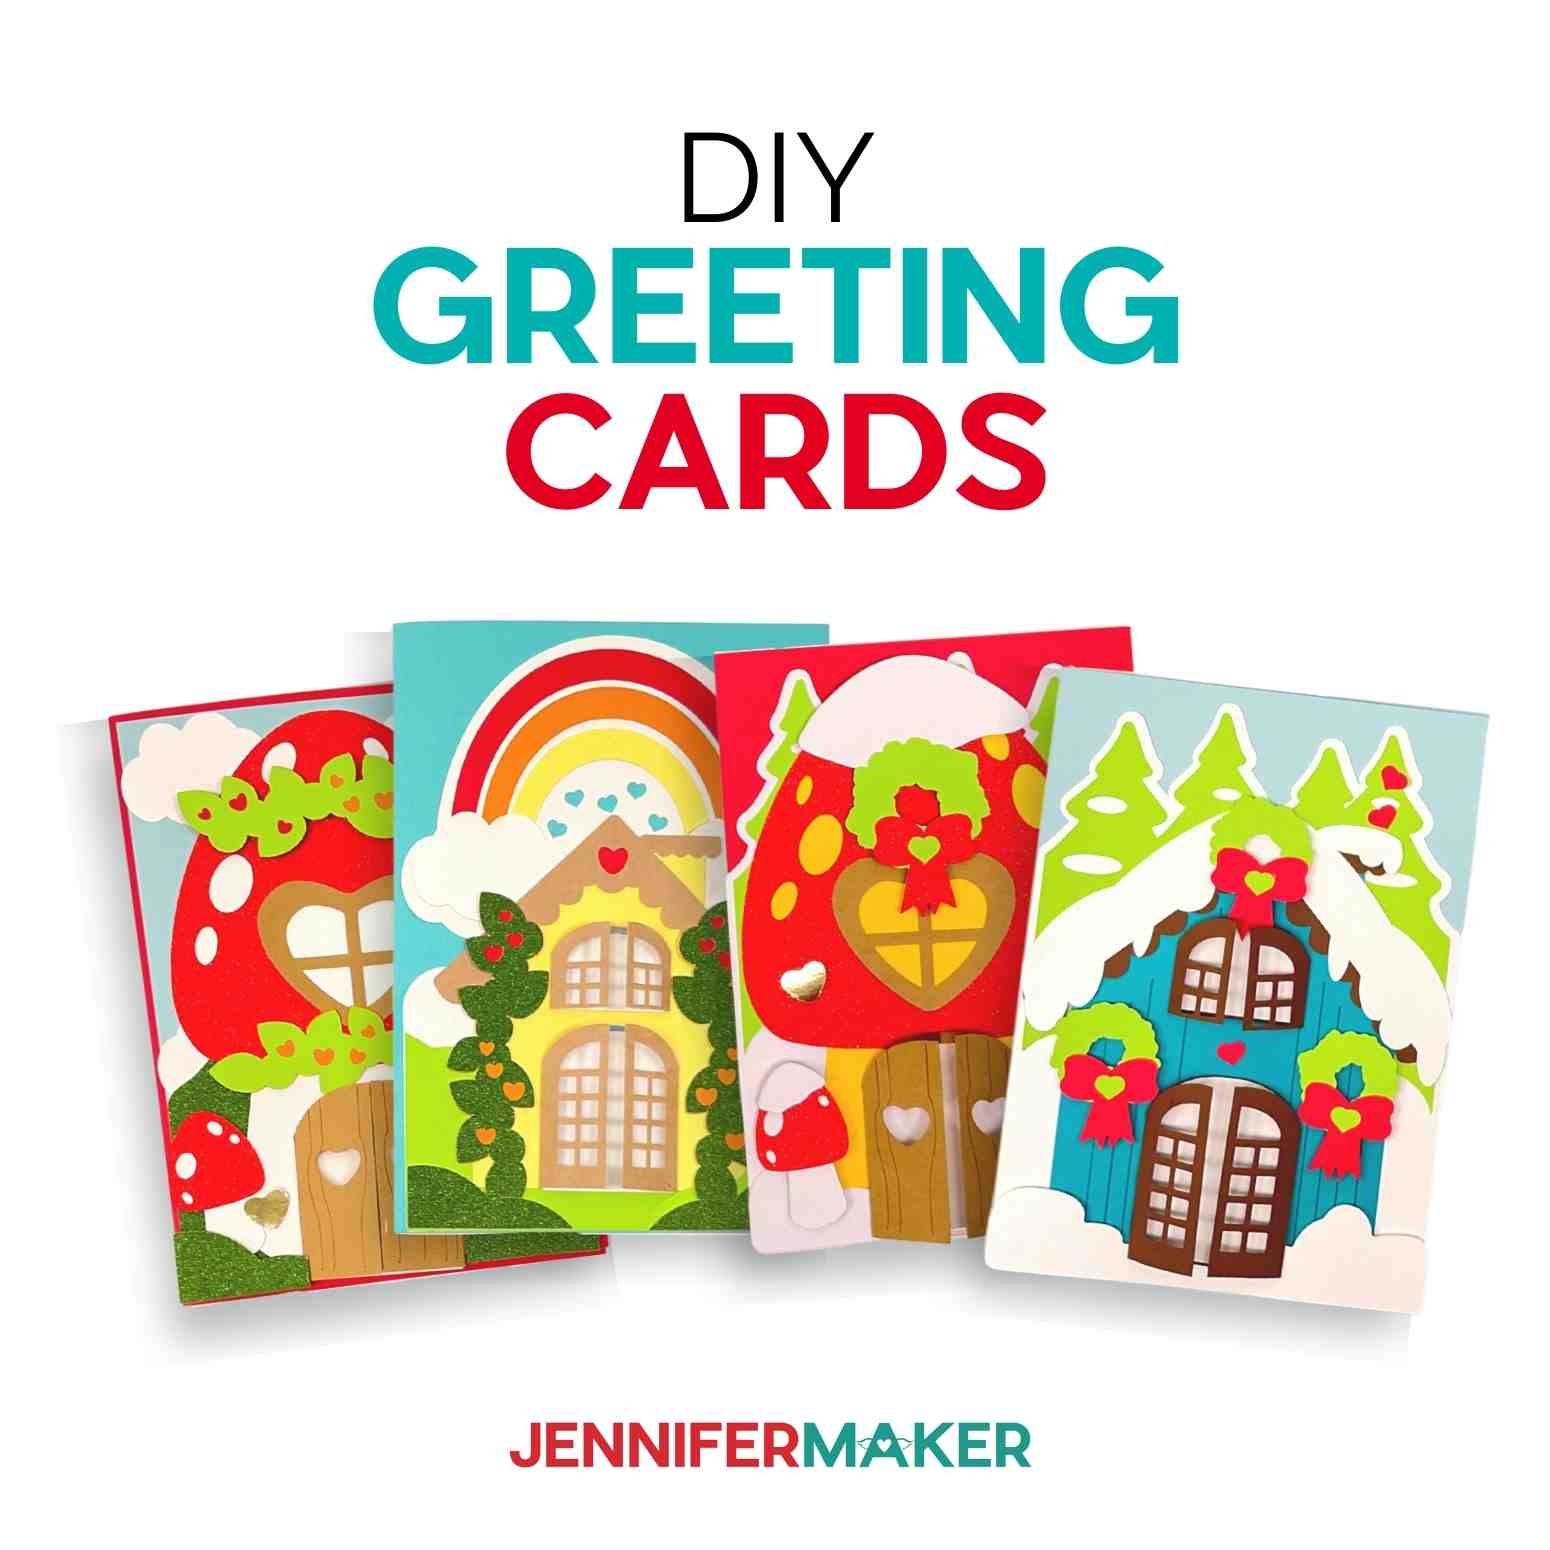 DIY Greeting Cards: Fun Homemade Card Ideas